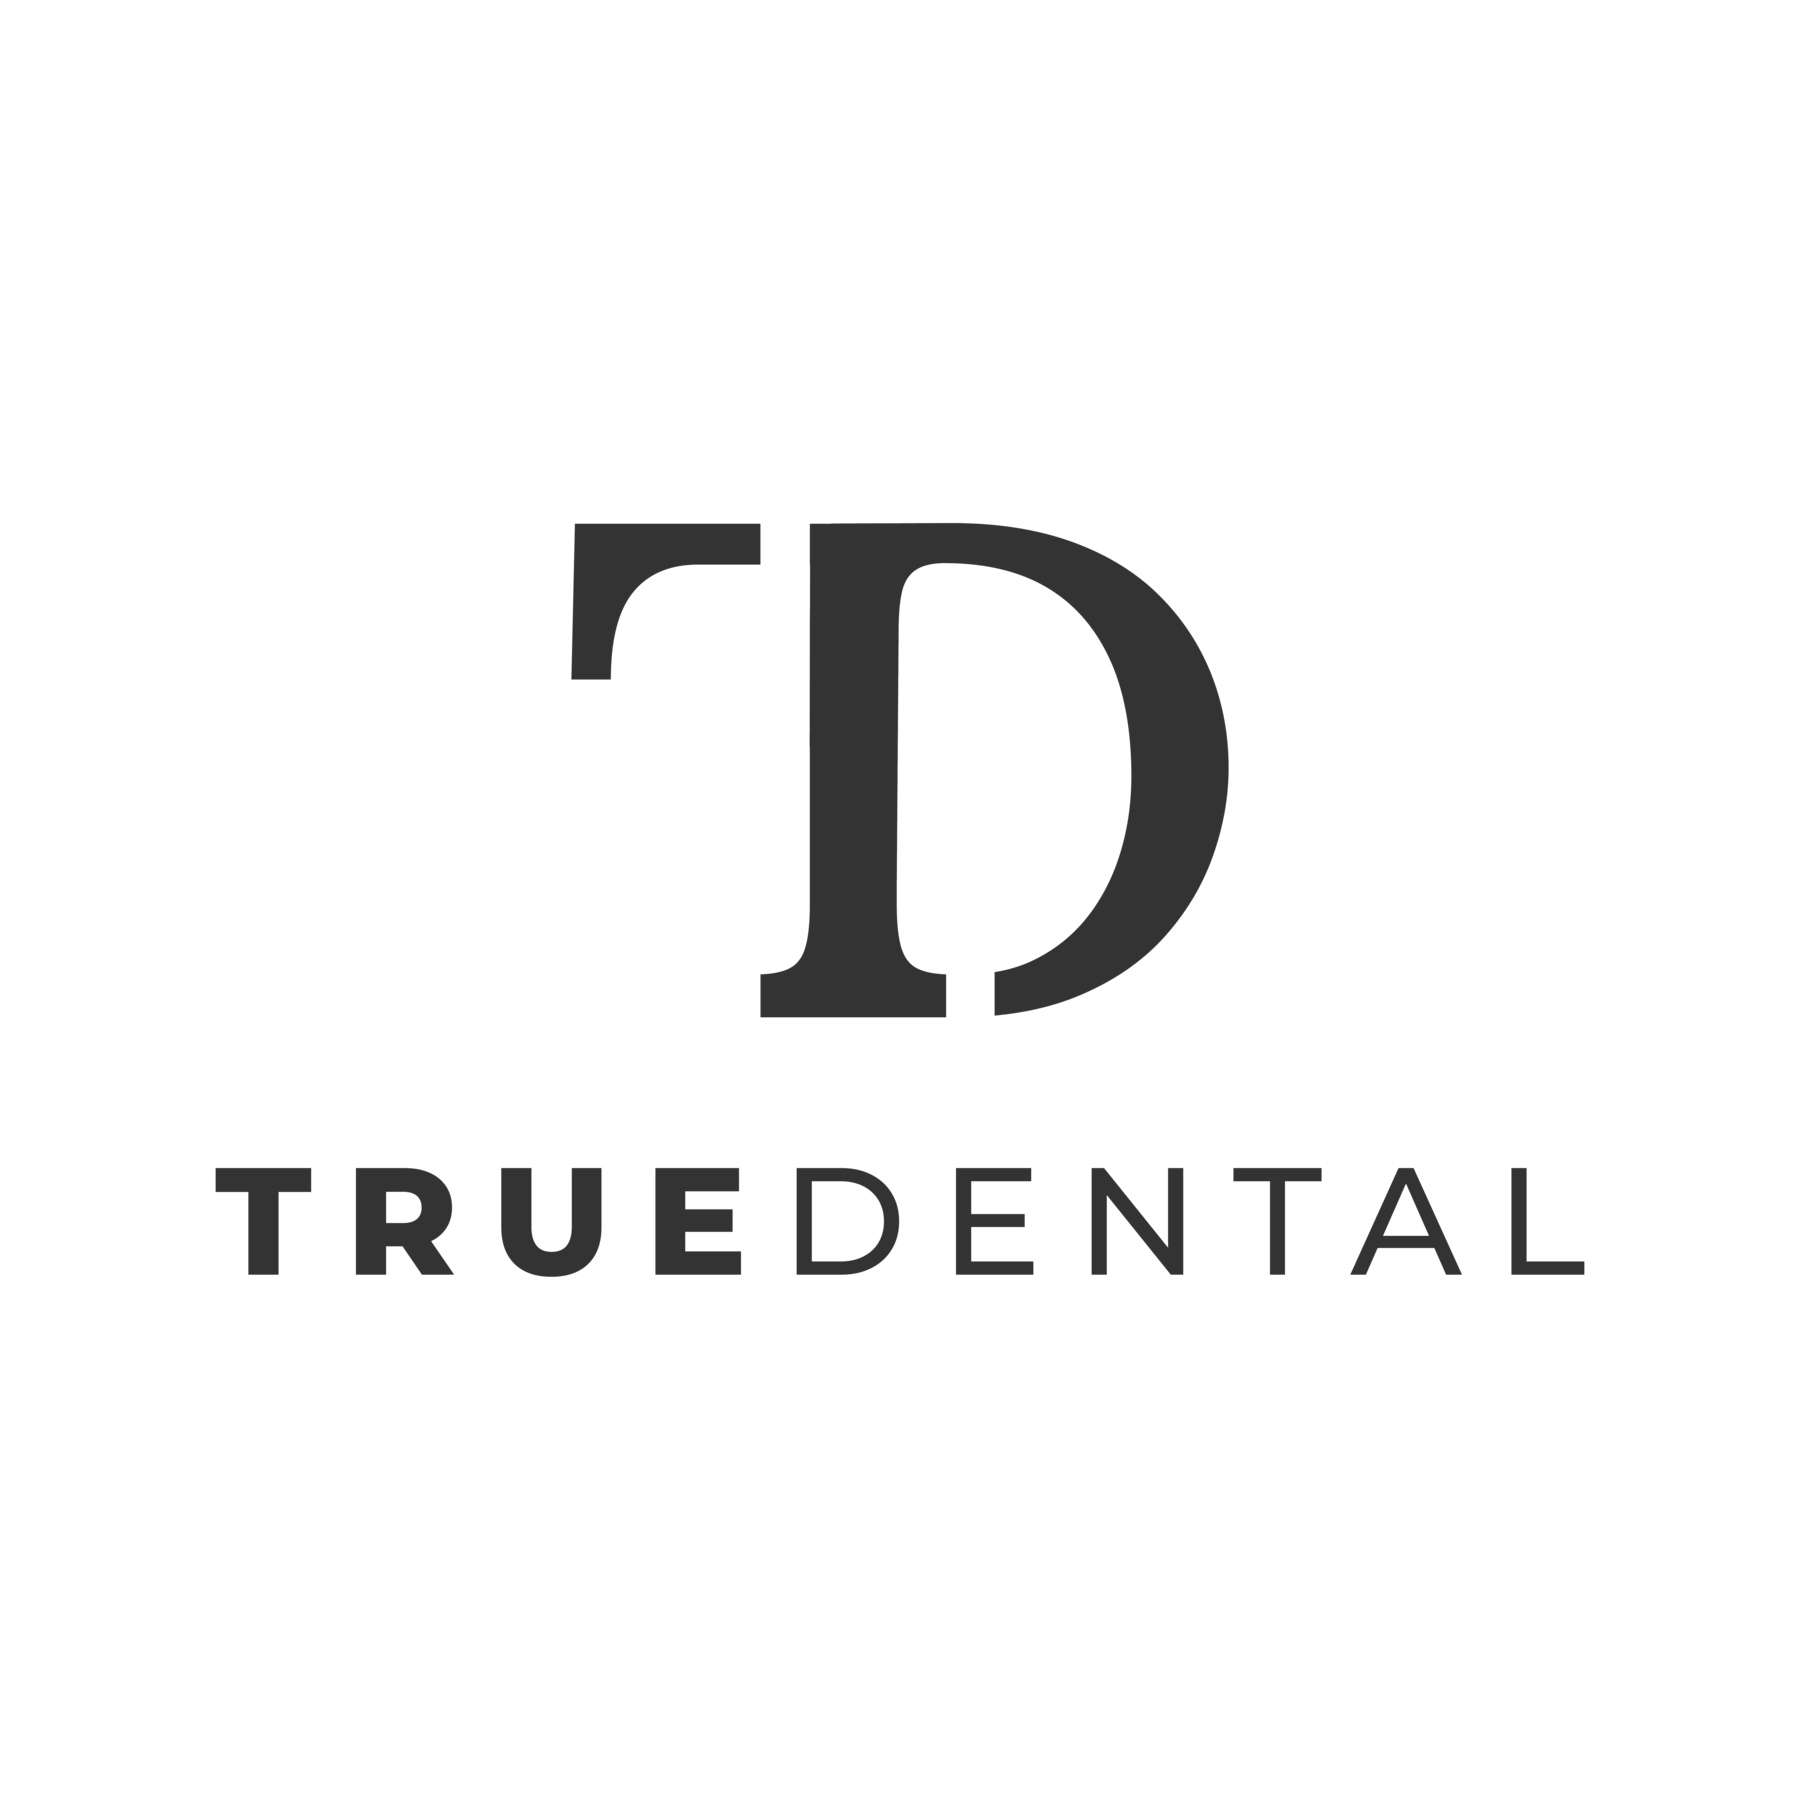 True Dental - Chattanooga - Chattanooga, TN 37421 - (423)899-9755 | ShowMeLocal.com